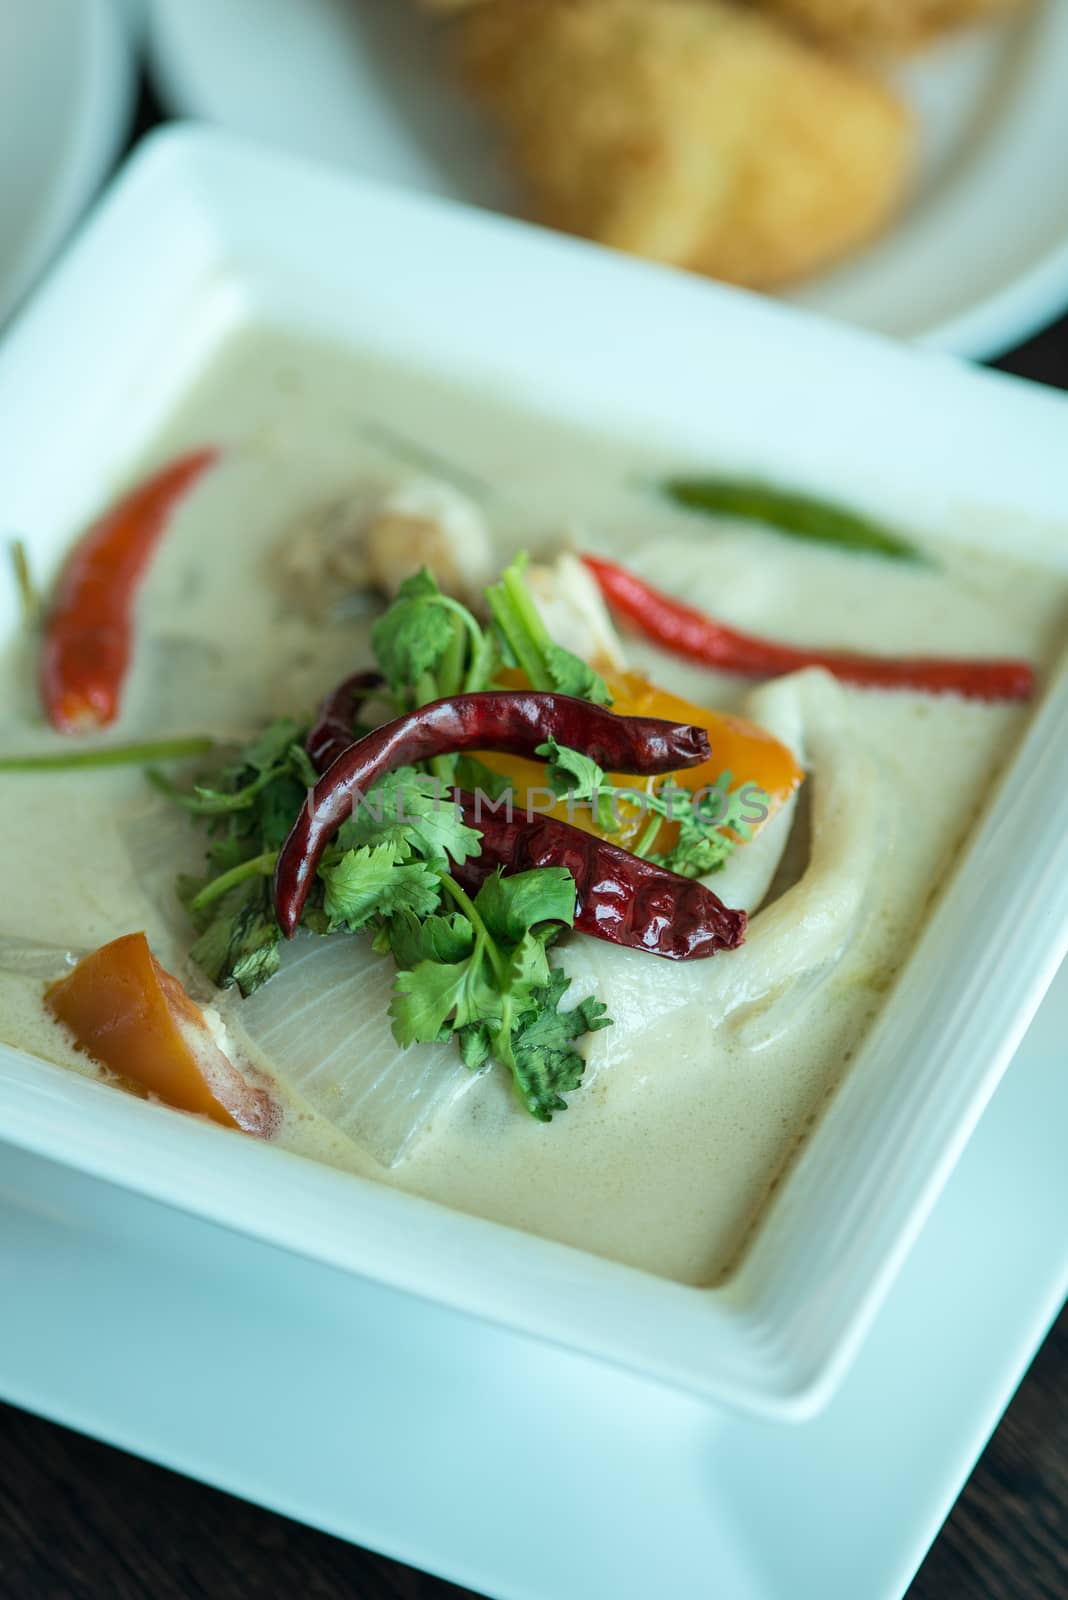 thai cuisine- tom kha kai -chicken in coconut milk soup by Yuri2012